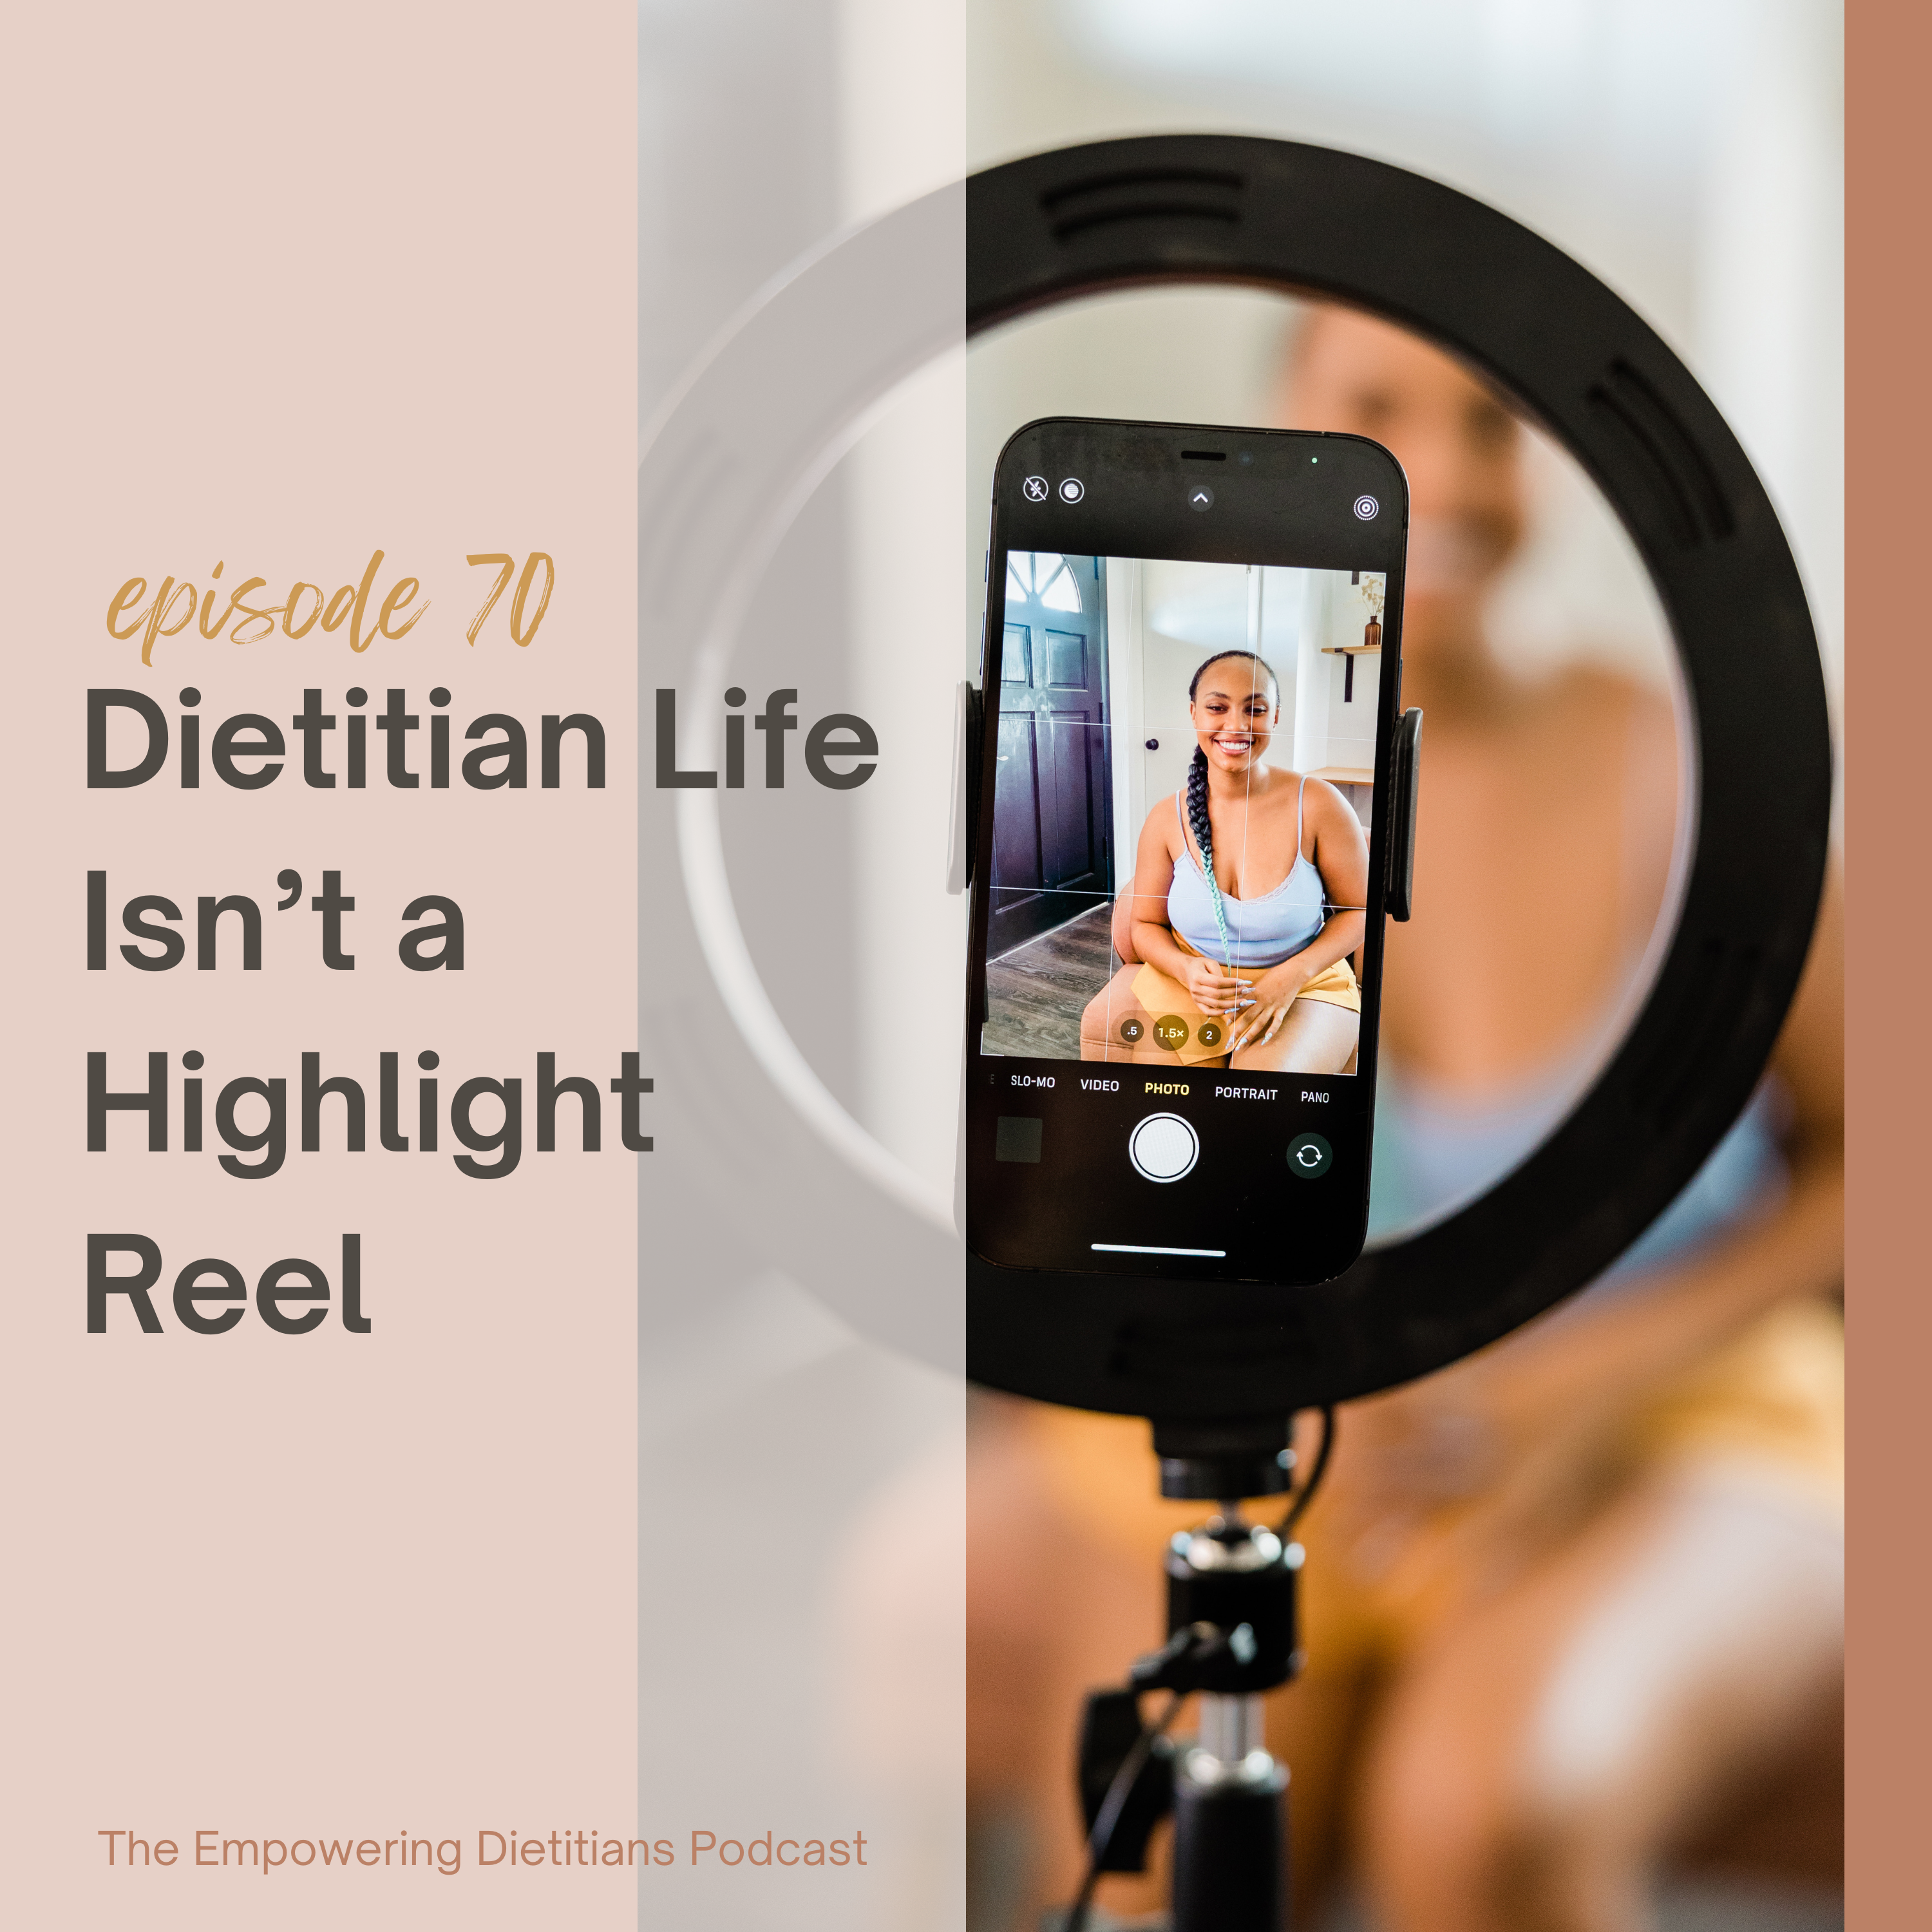 life as a dietitian isn't a highlight reel